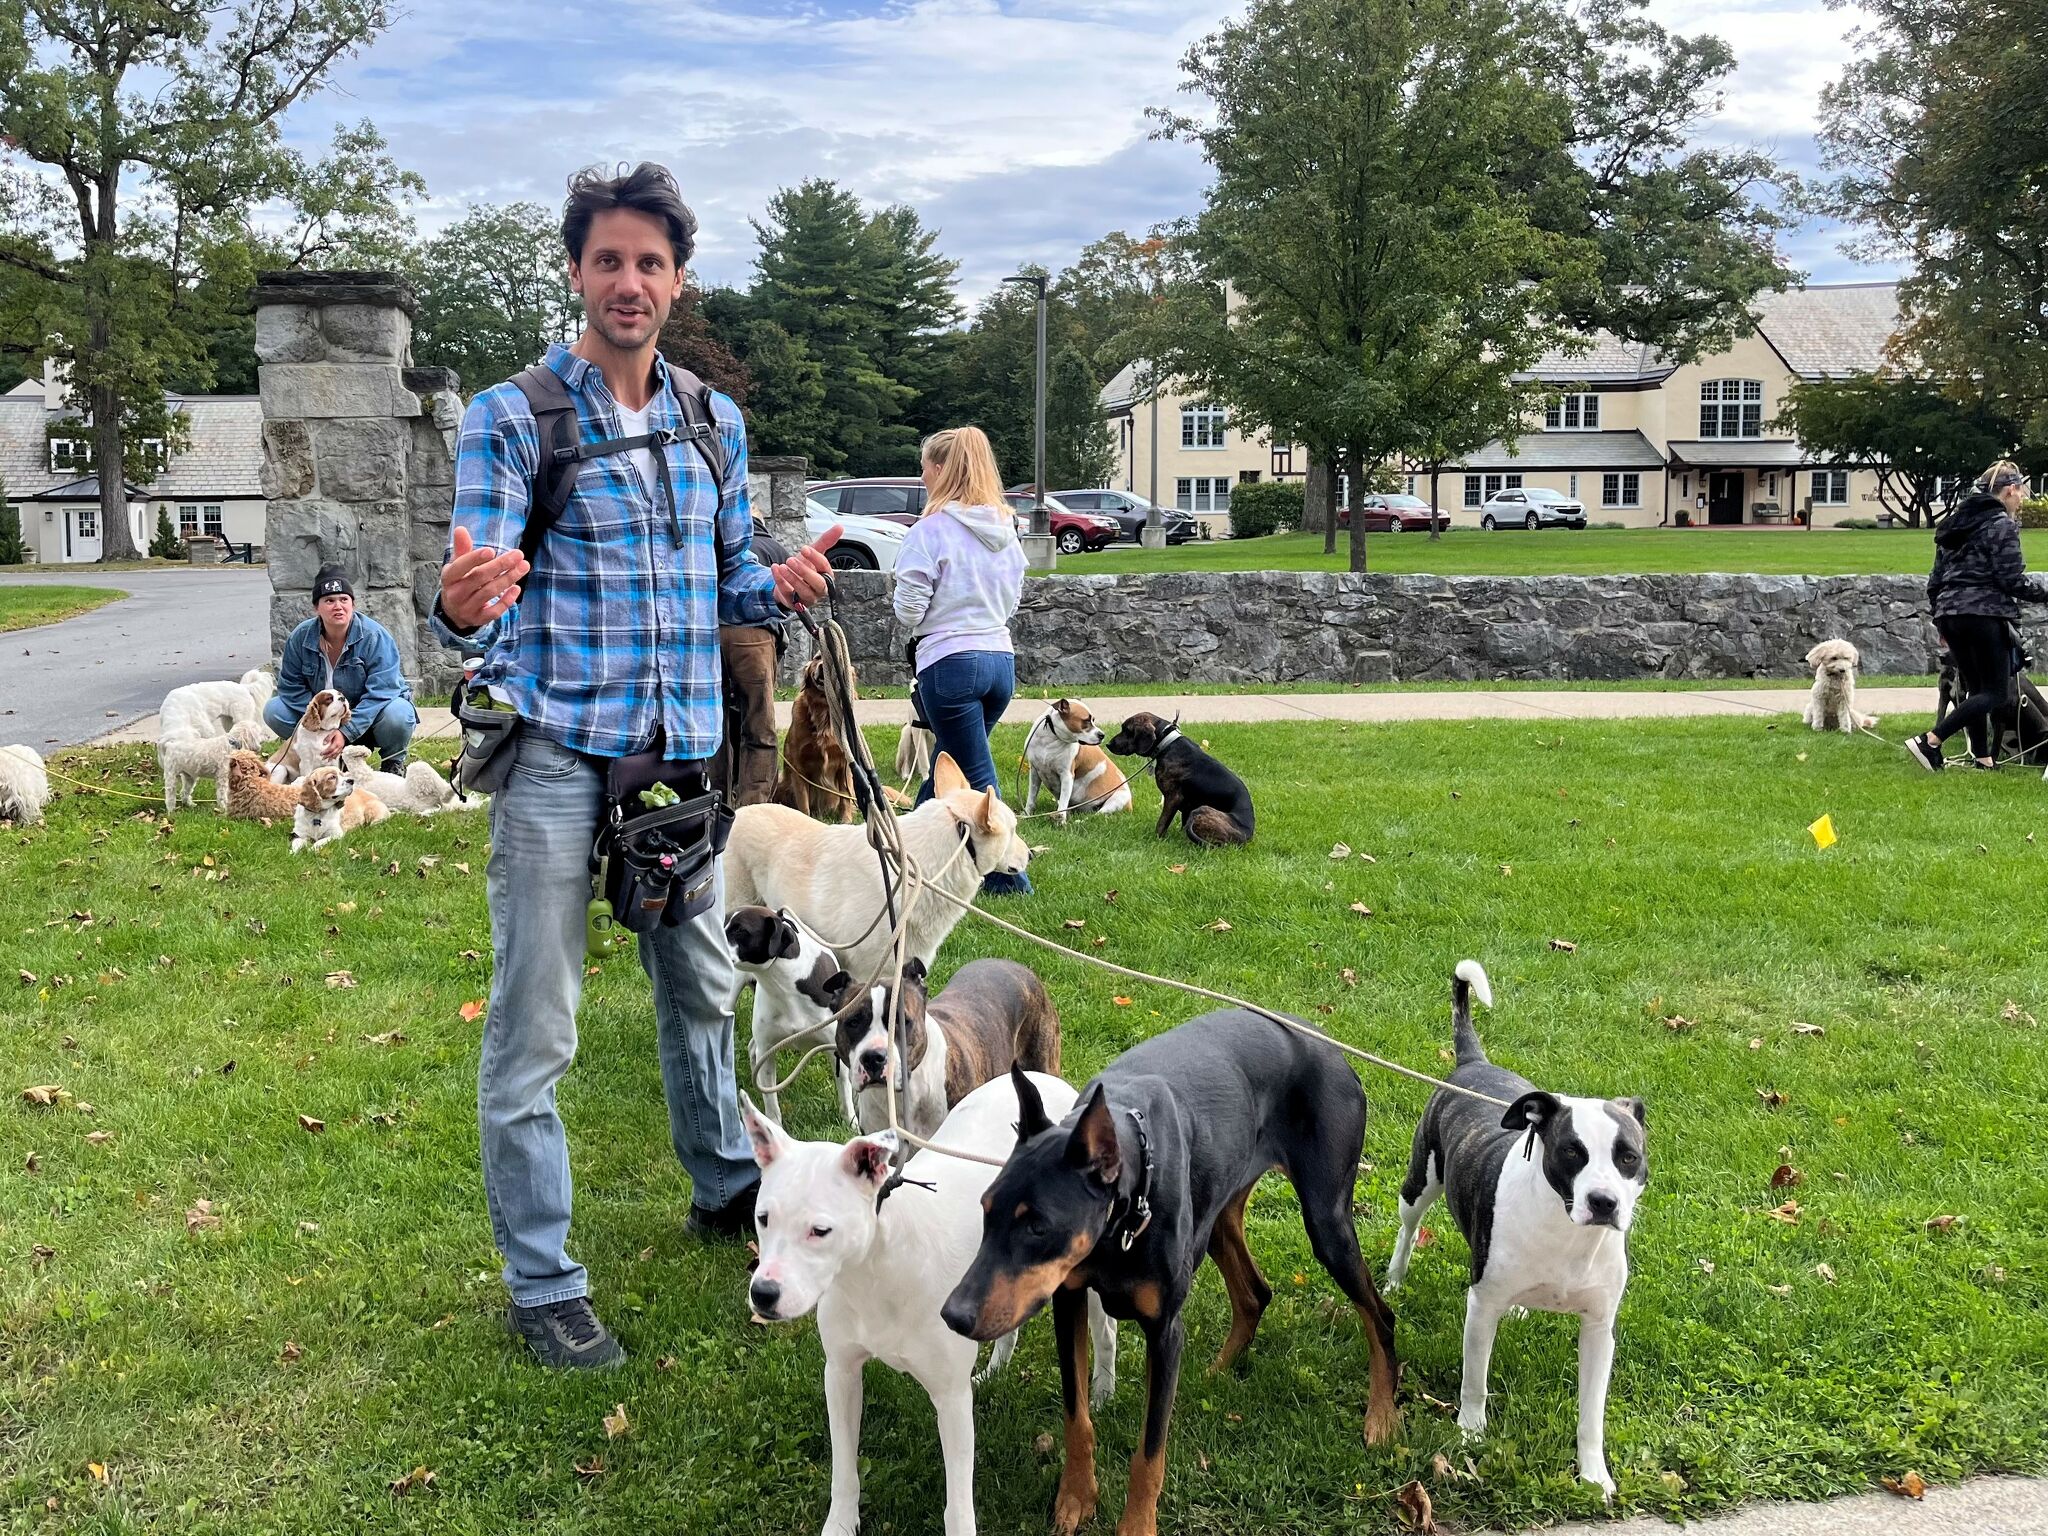 Saratoga dog walker has a big following, Life & Arts